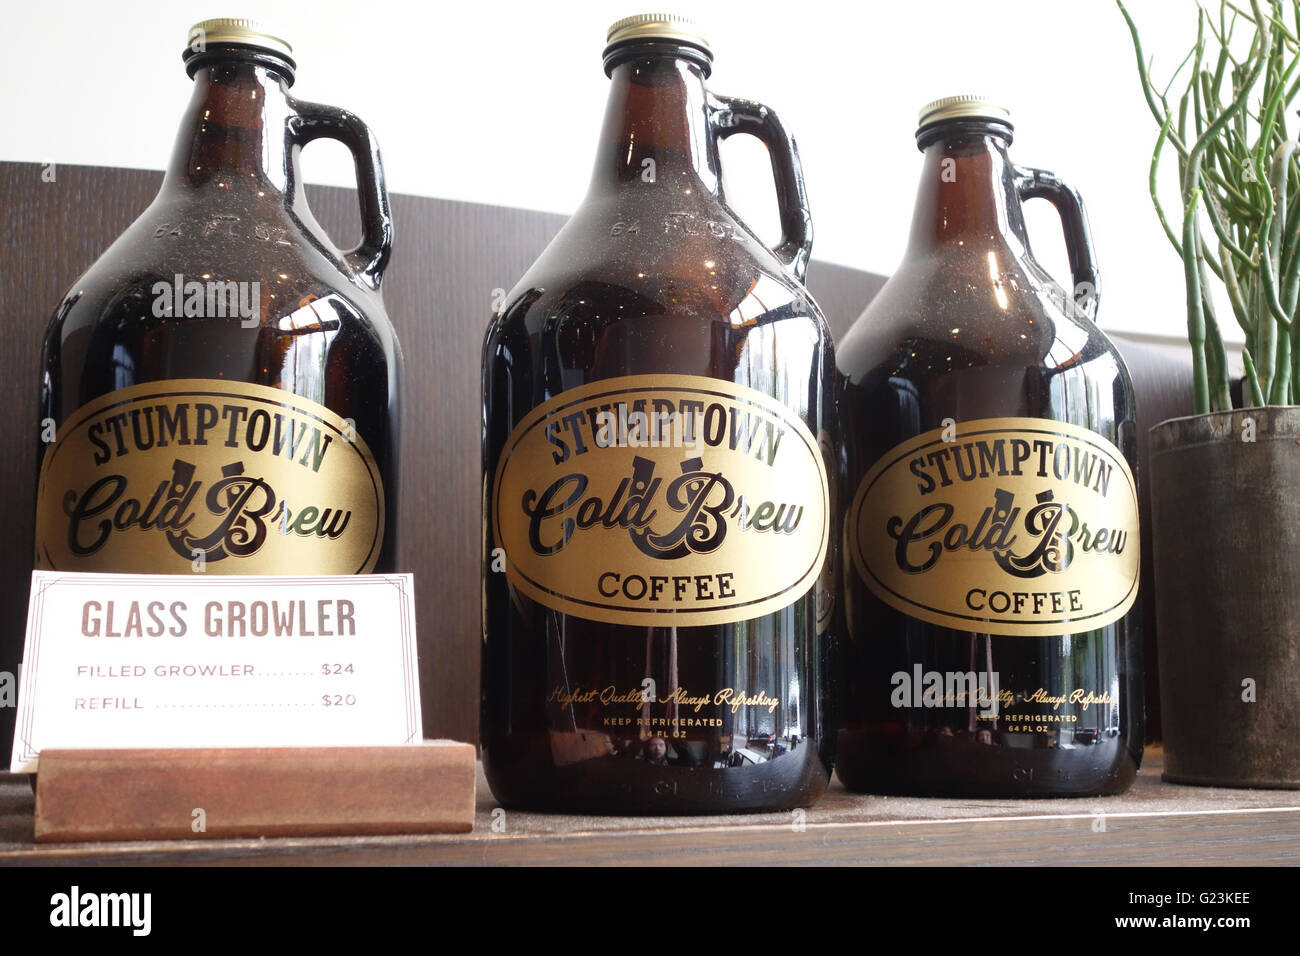 Stumptown cold brew coffee Stock Photo